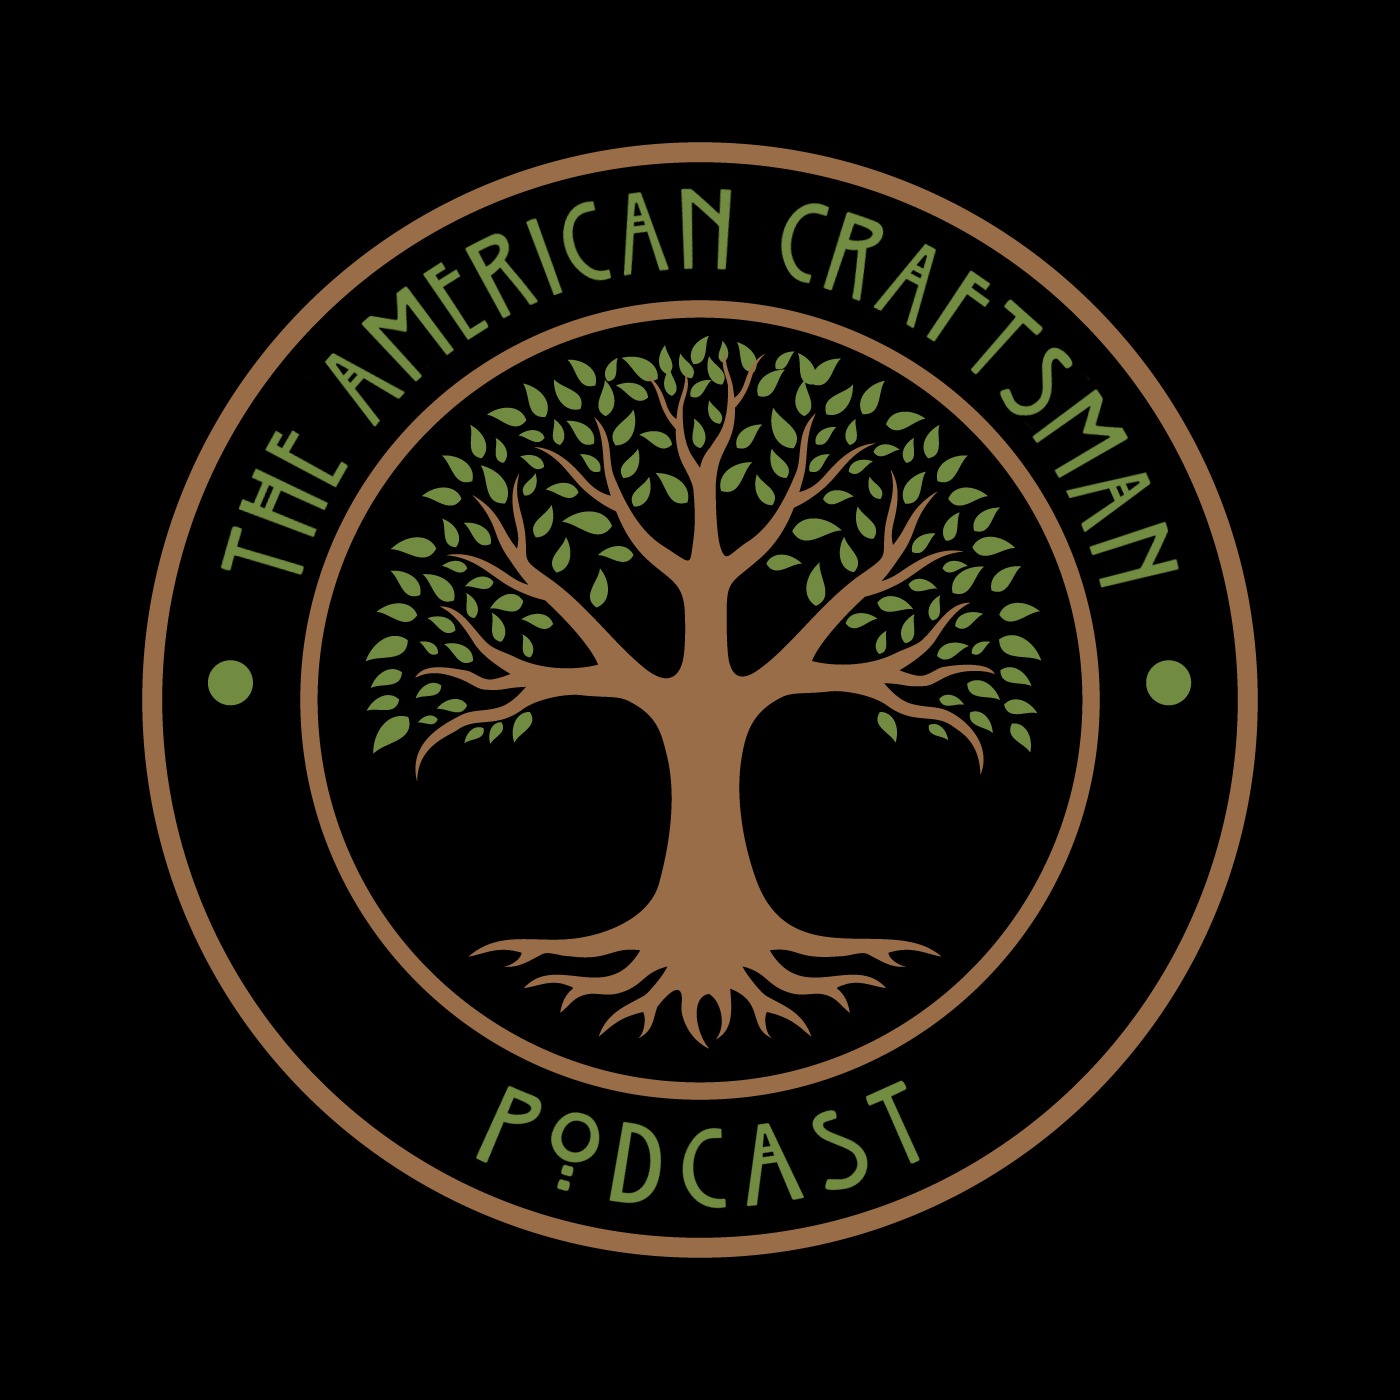 The American Craftsman Podcast. Season 2, Episode 46.